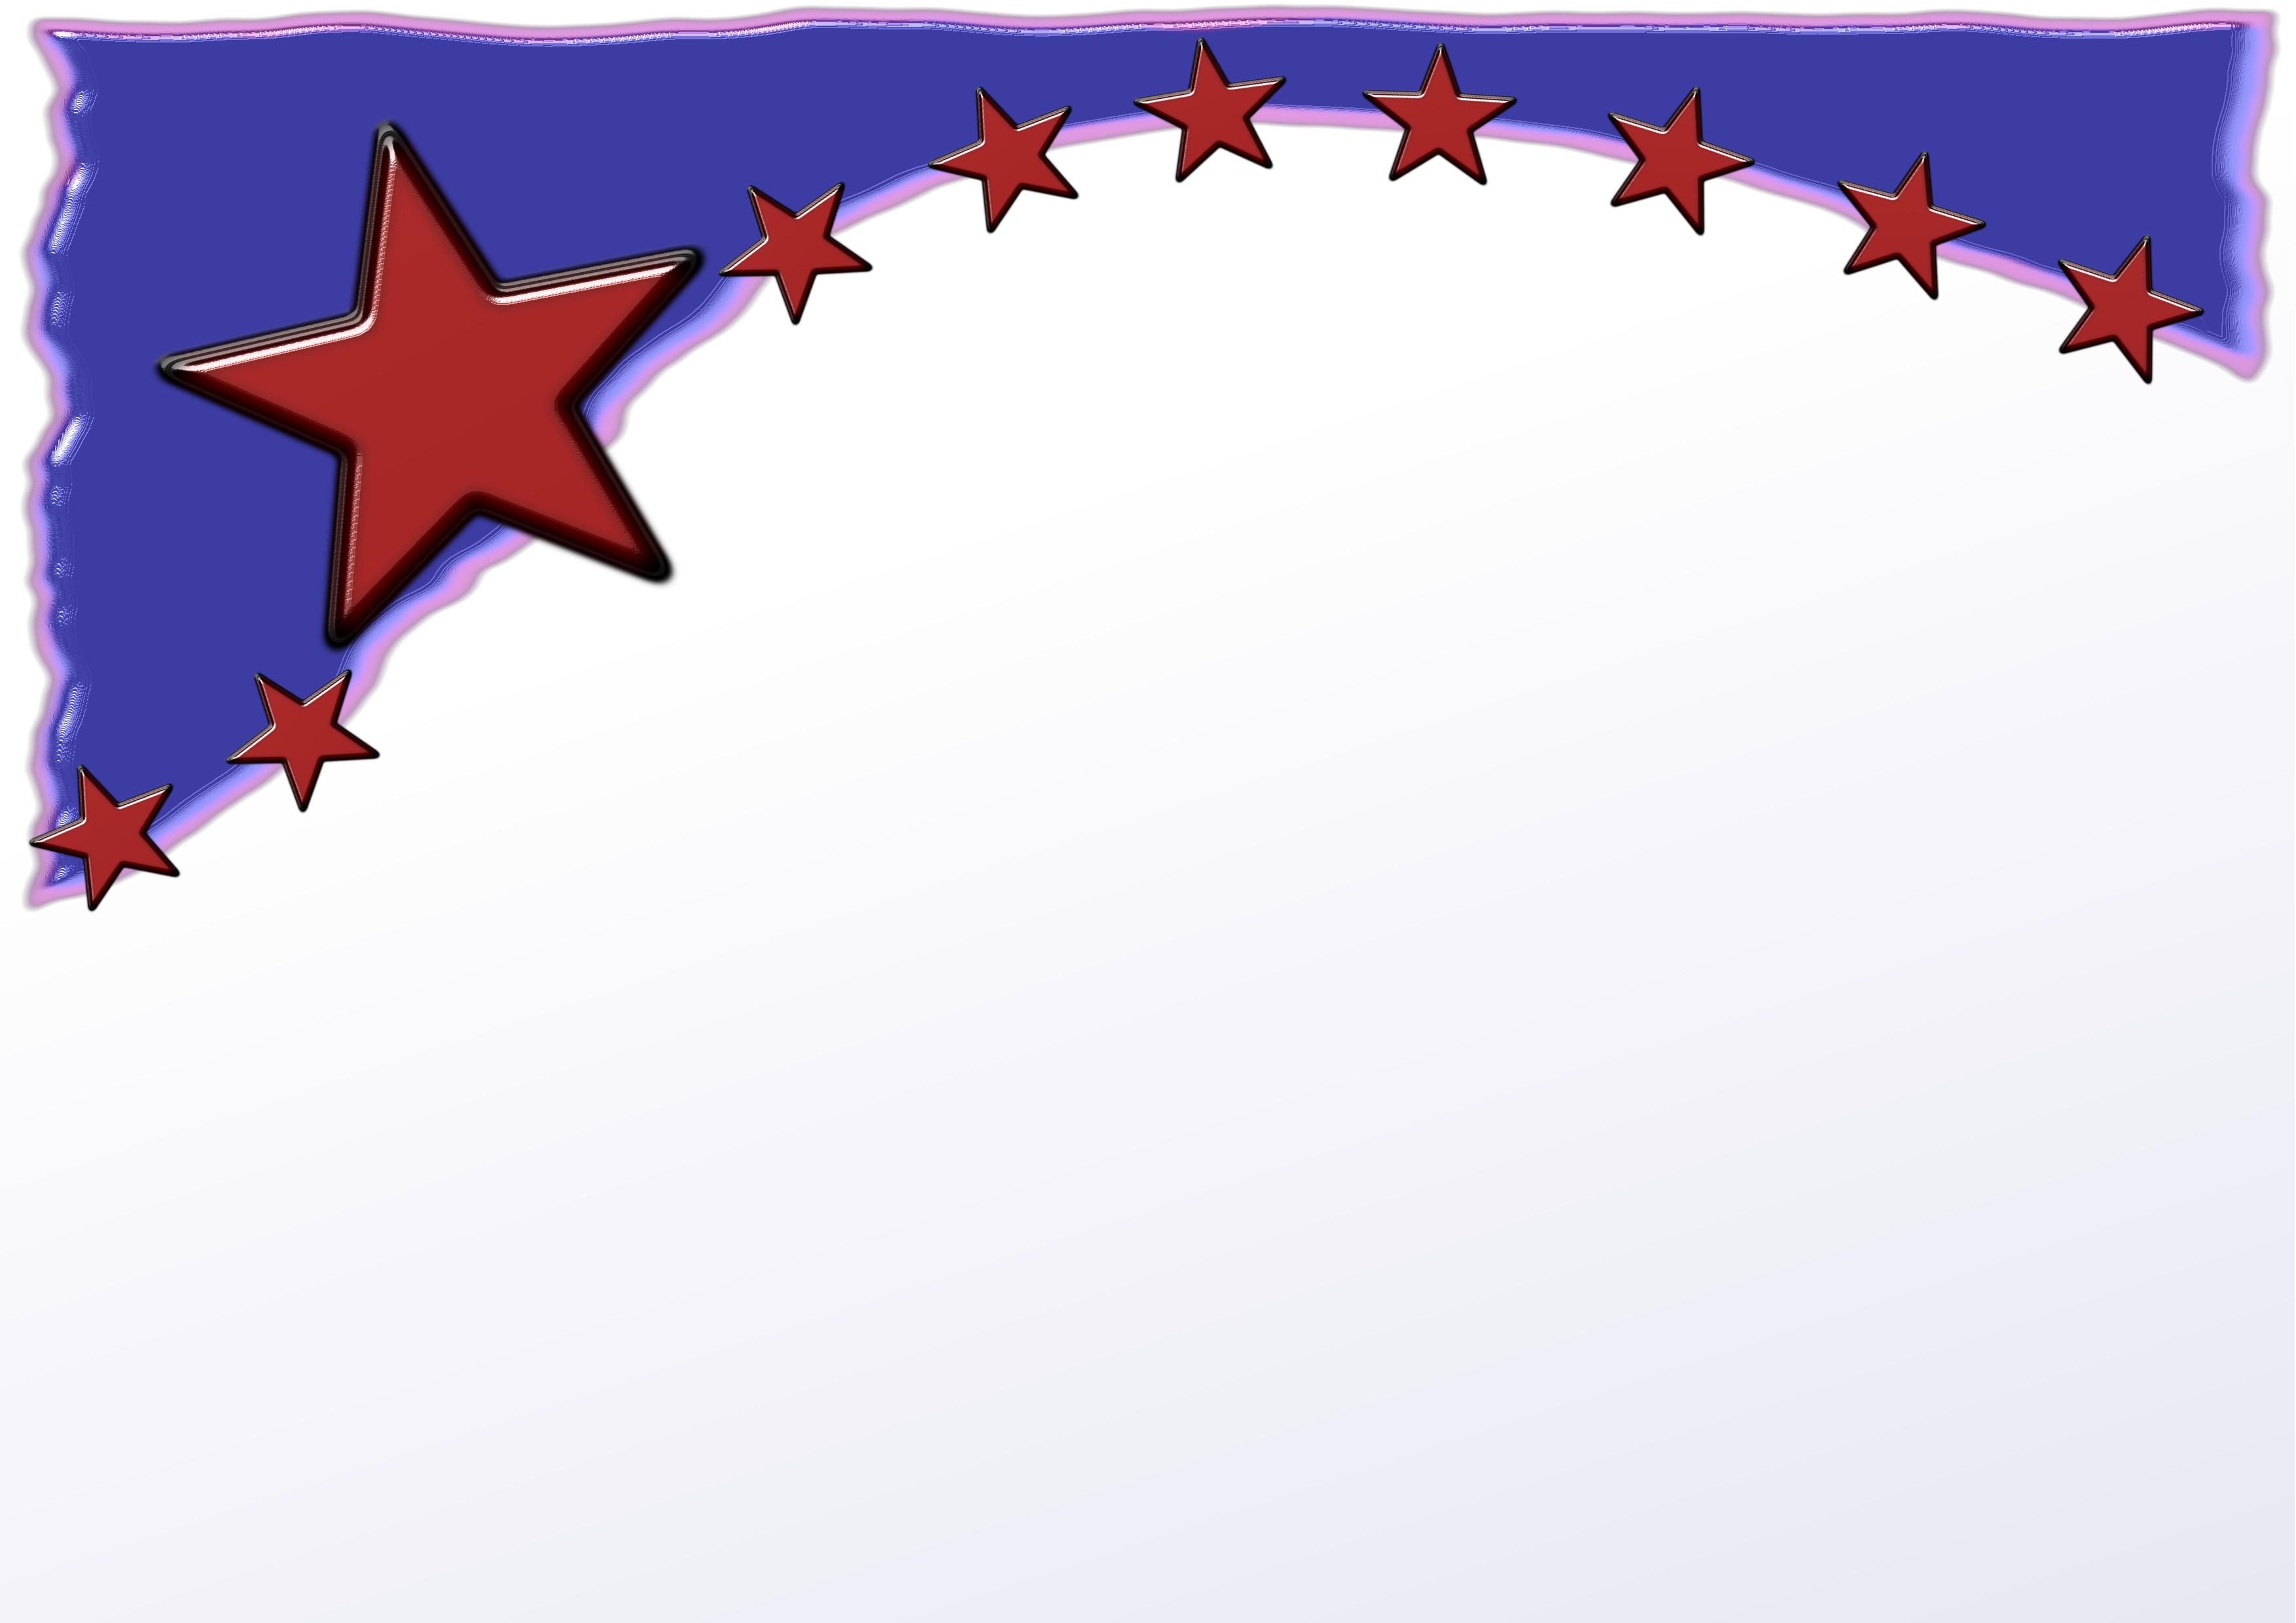 Patriotic star border clipart 